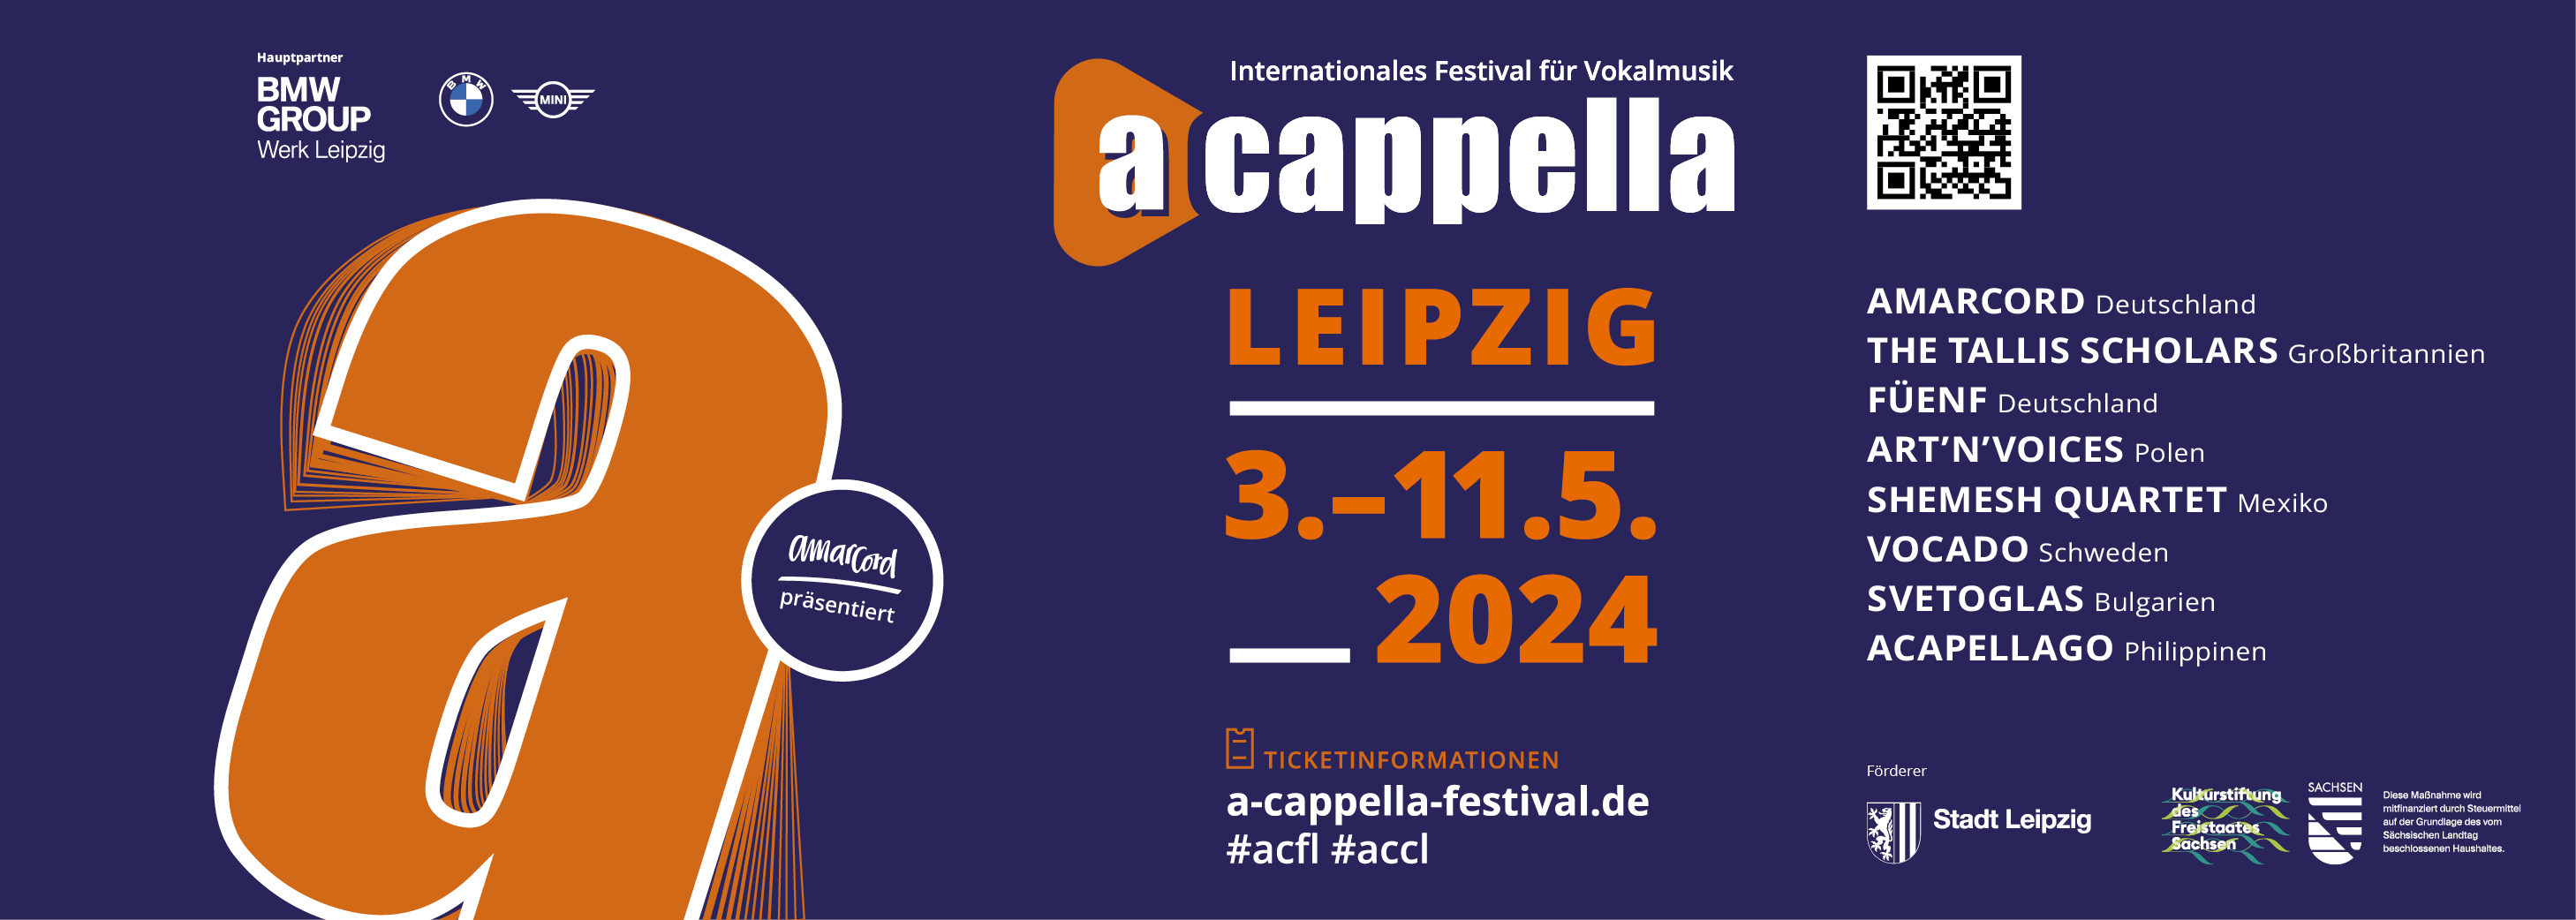 Internationales Festival für Vokalmusik »a cappella« Leipzig